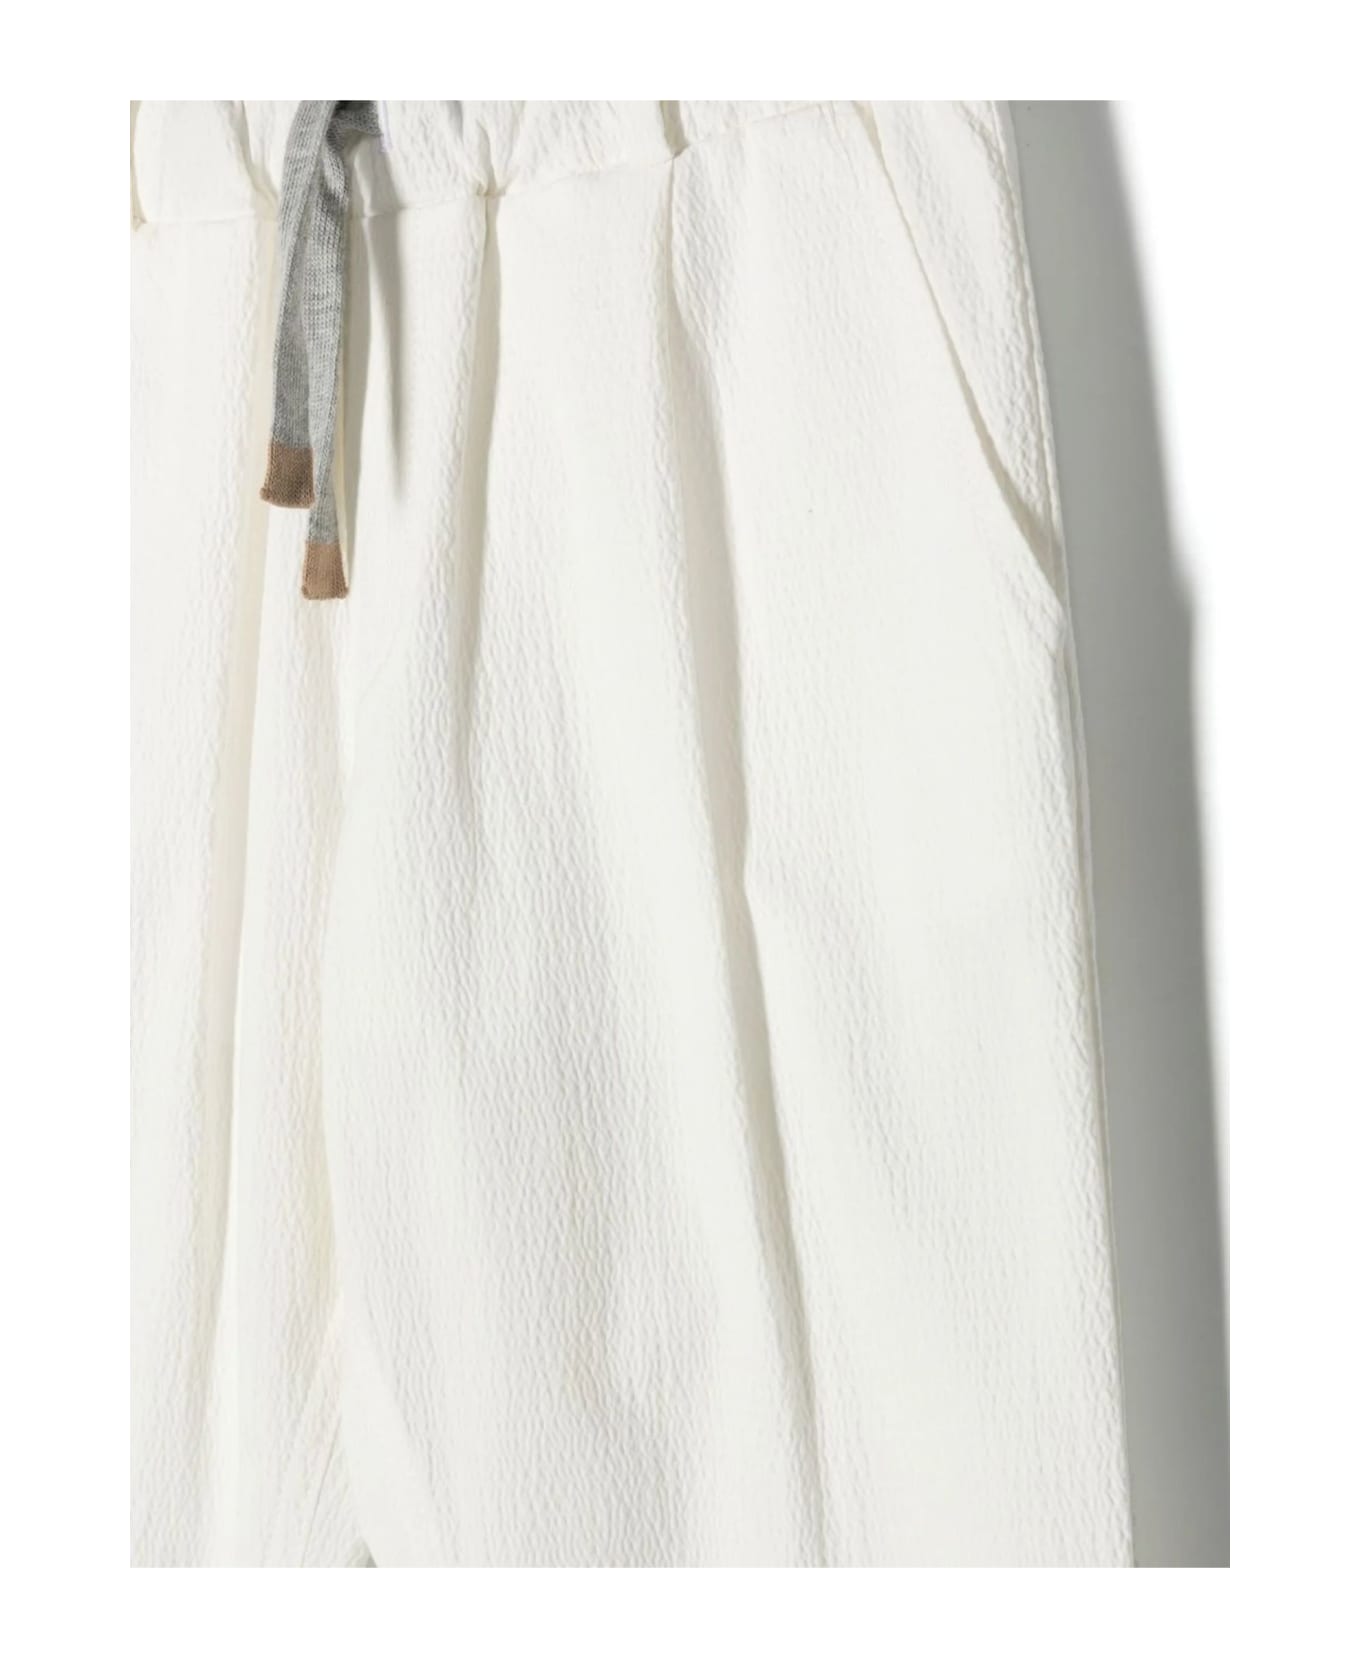 Eleventy Trousers White - White ボトムス